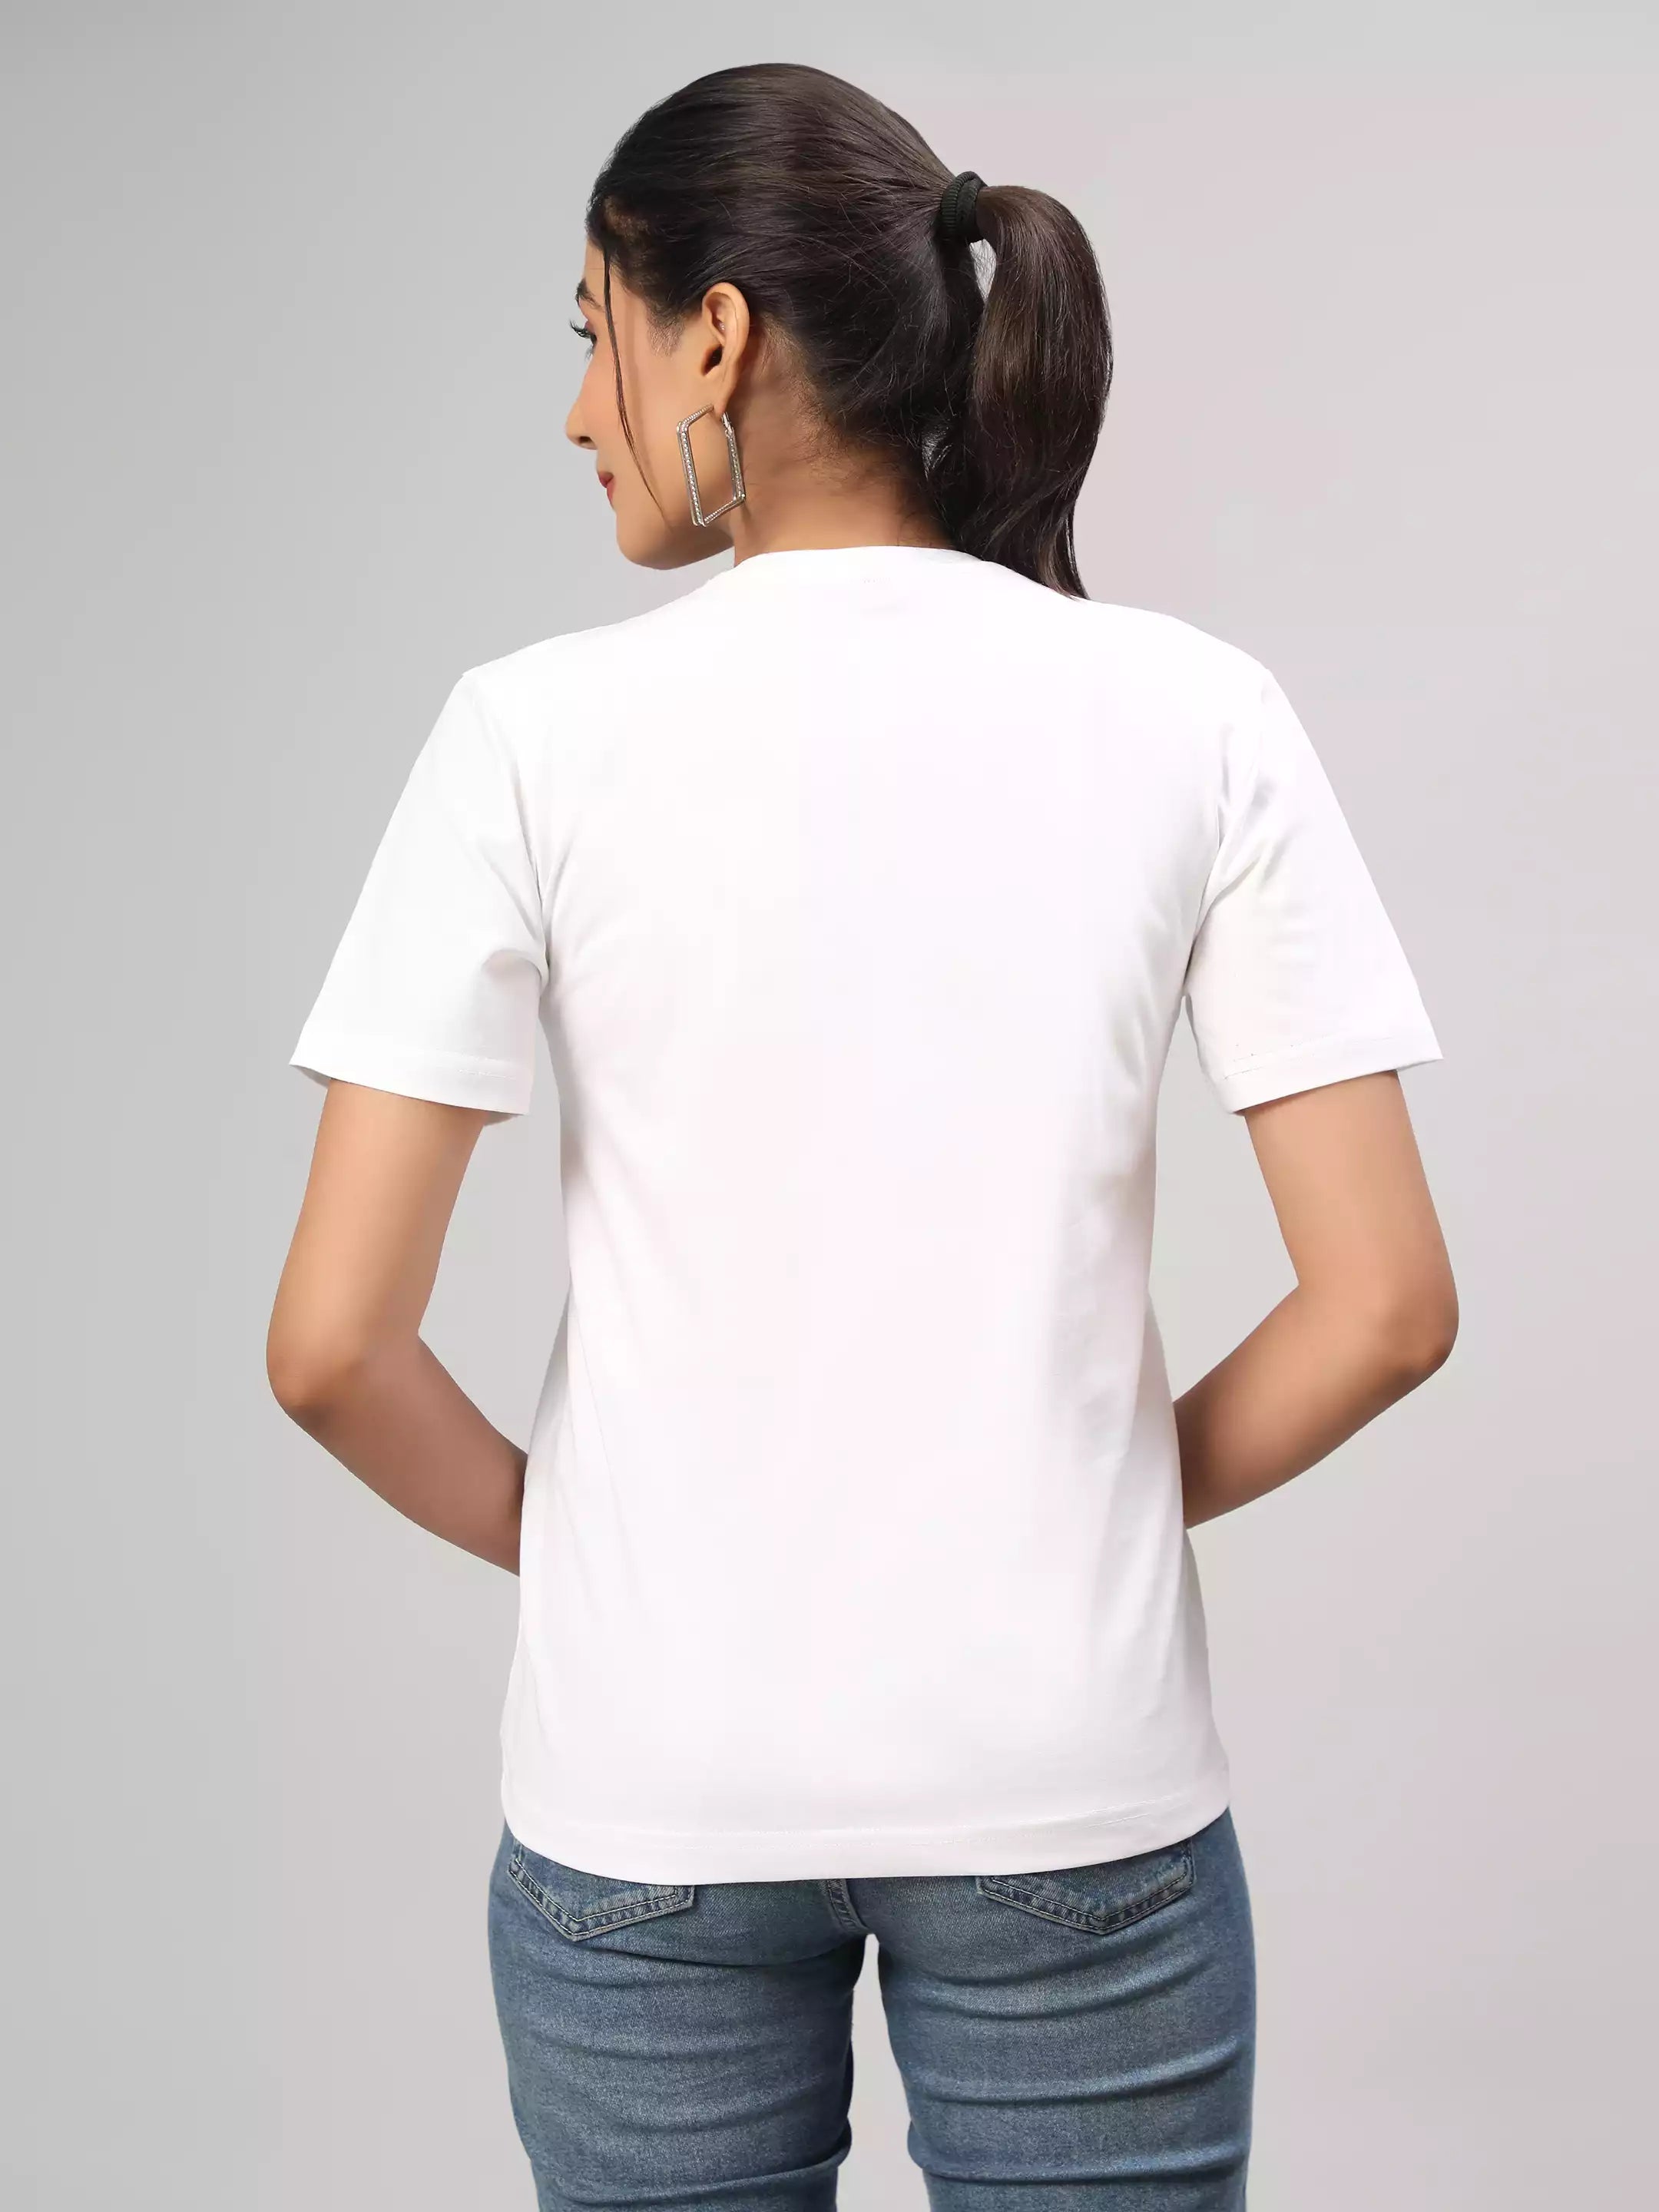 Mujhe sab patha hai - Sukhiaatma Unisex Graphic Printed white T-shirt